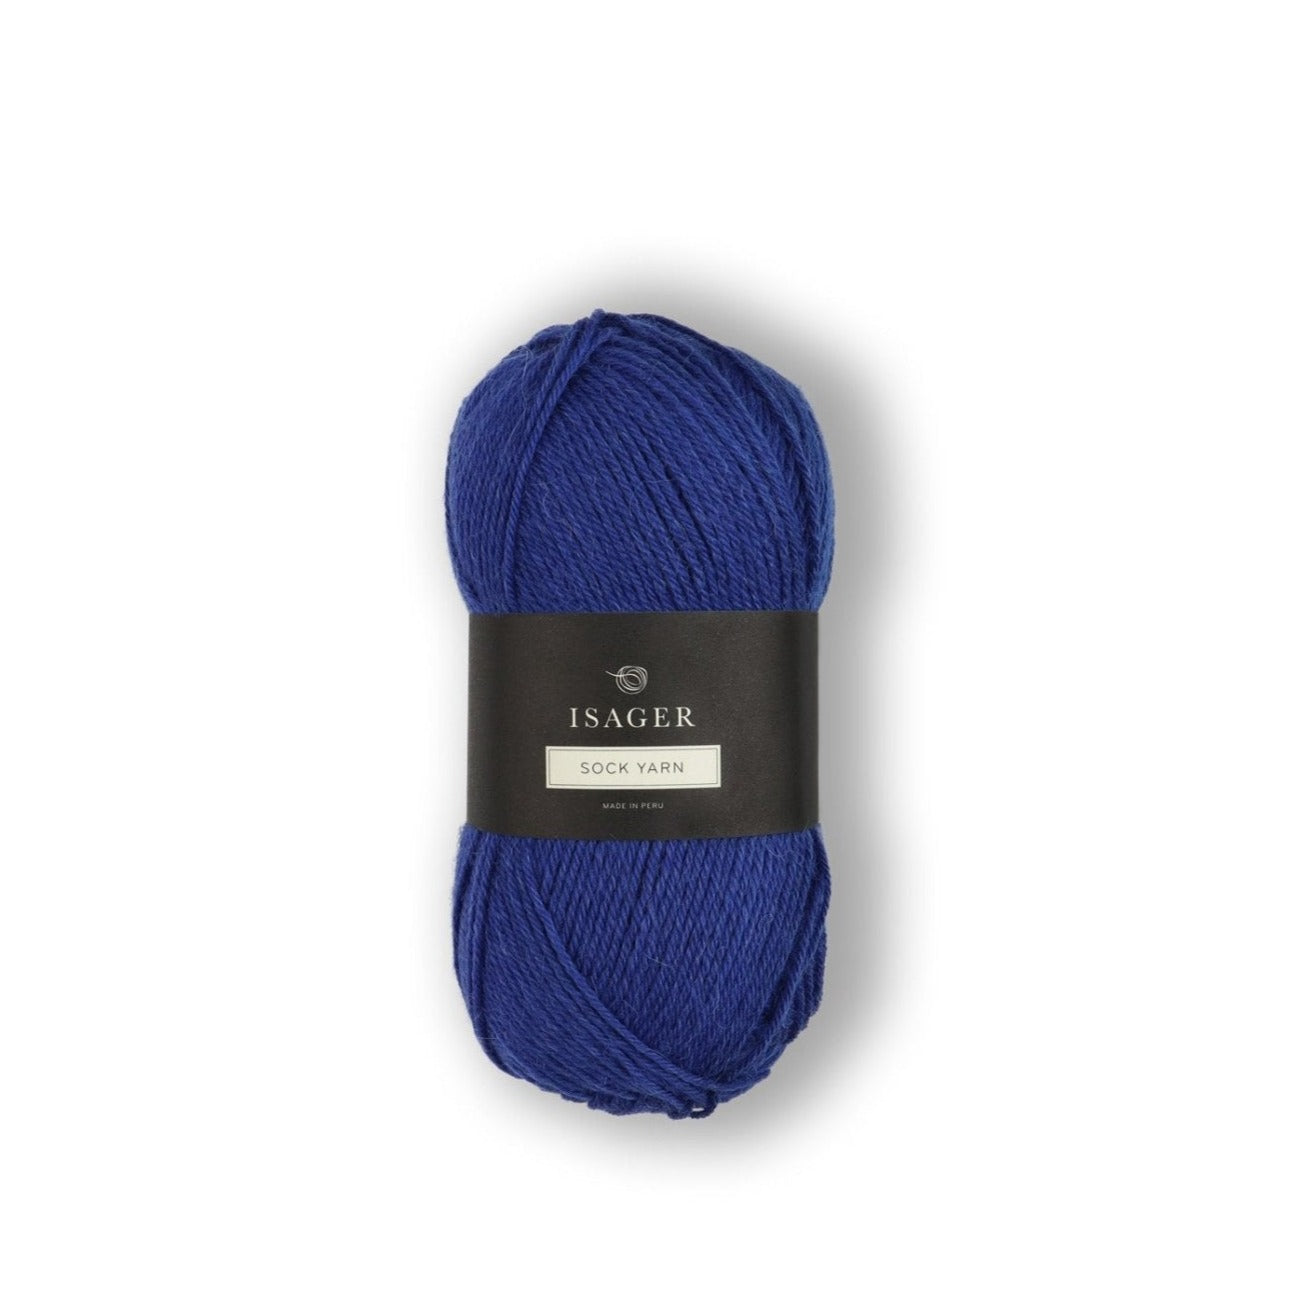 Isager Sock Yarn - 44 - 4 Ply - Alpaca - The Little Yarn Store